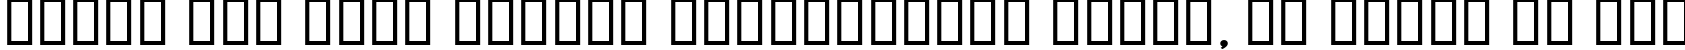 Пример написания шрифтом B Jadid Bold текста на русском